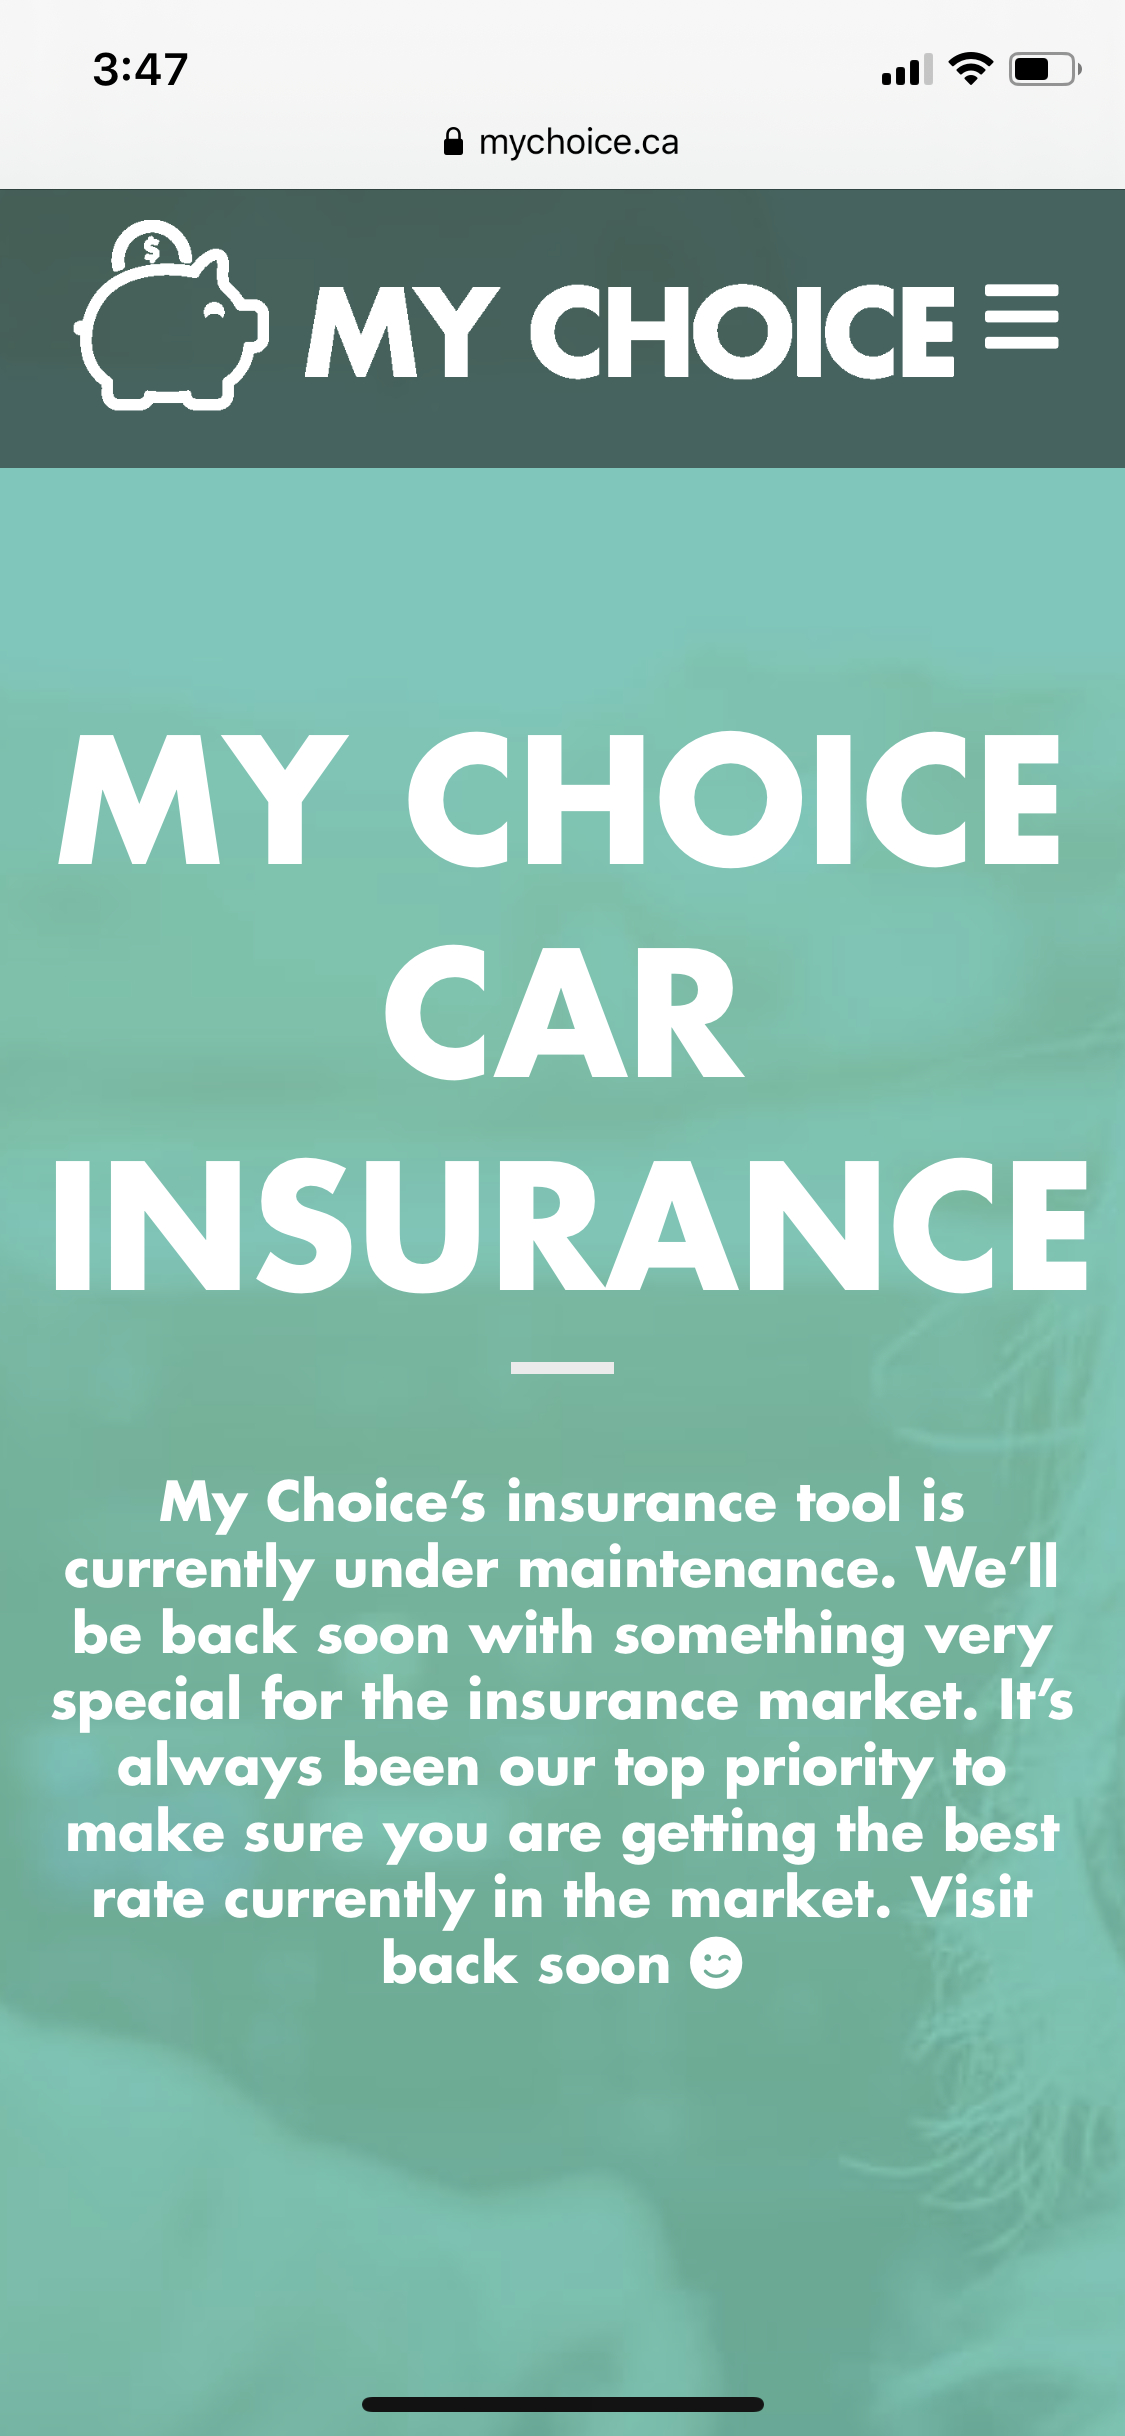 Halifax Car Insurance My Choice throughout dimensions 1125 X 2436